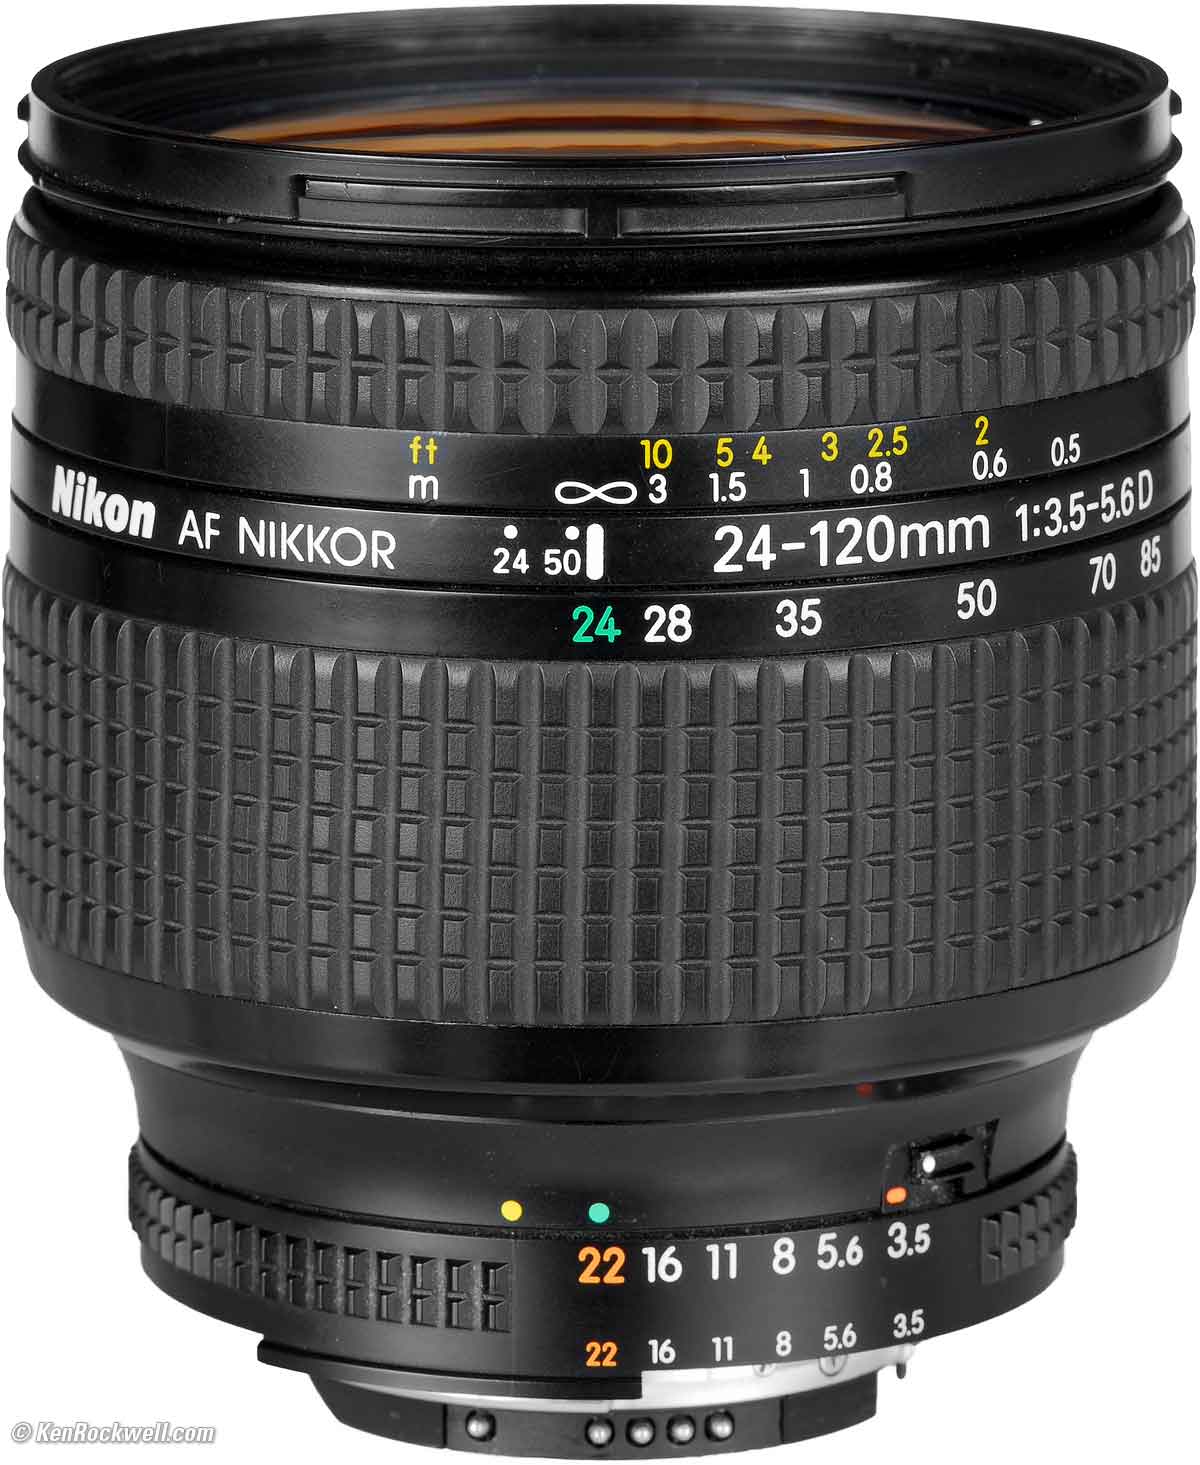 ニコン AF NIKKOR 24-120mm f/3.5-5.6 D レンズ-